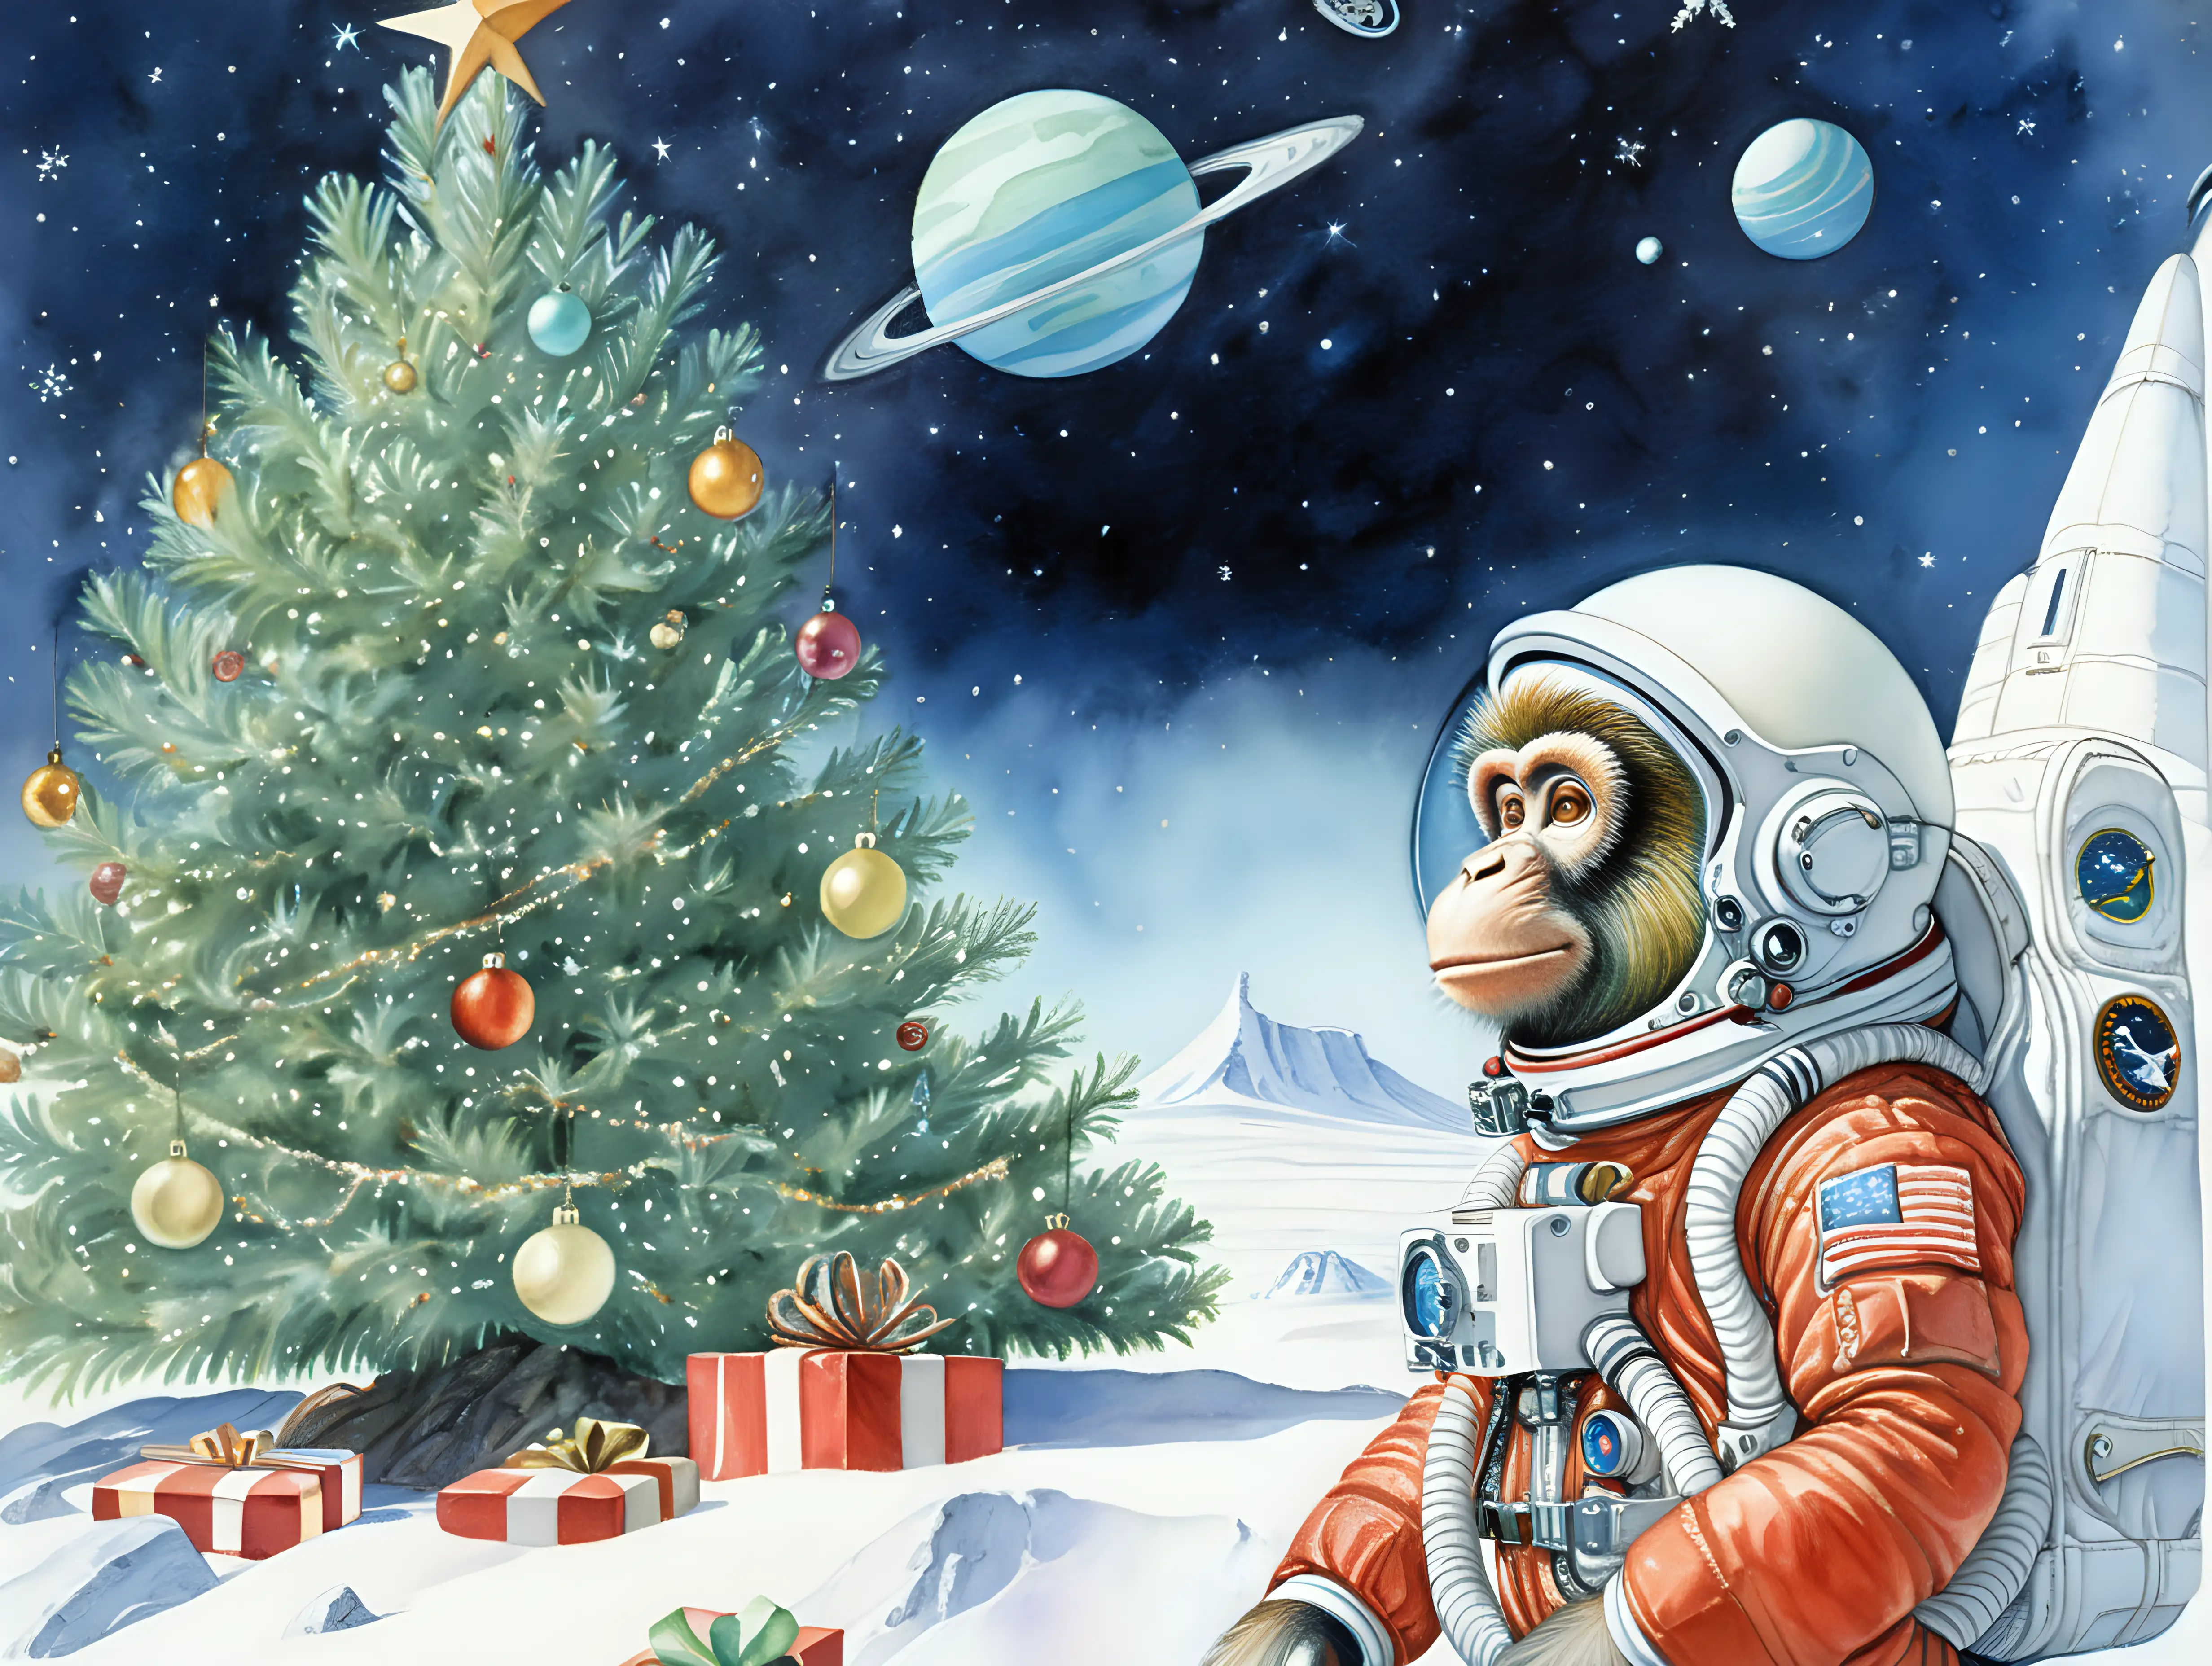 Astronaut Monkey Celebrates Christmas in MoebiusInspired Space Setting